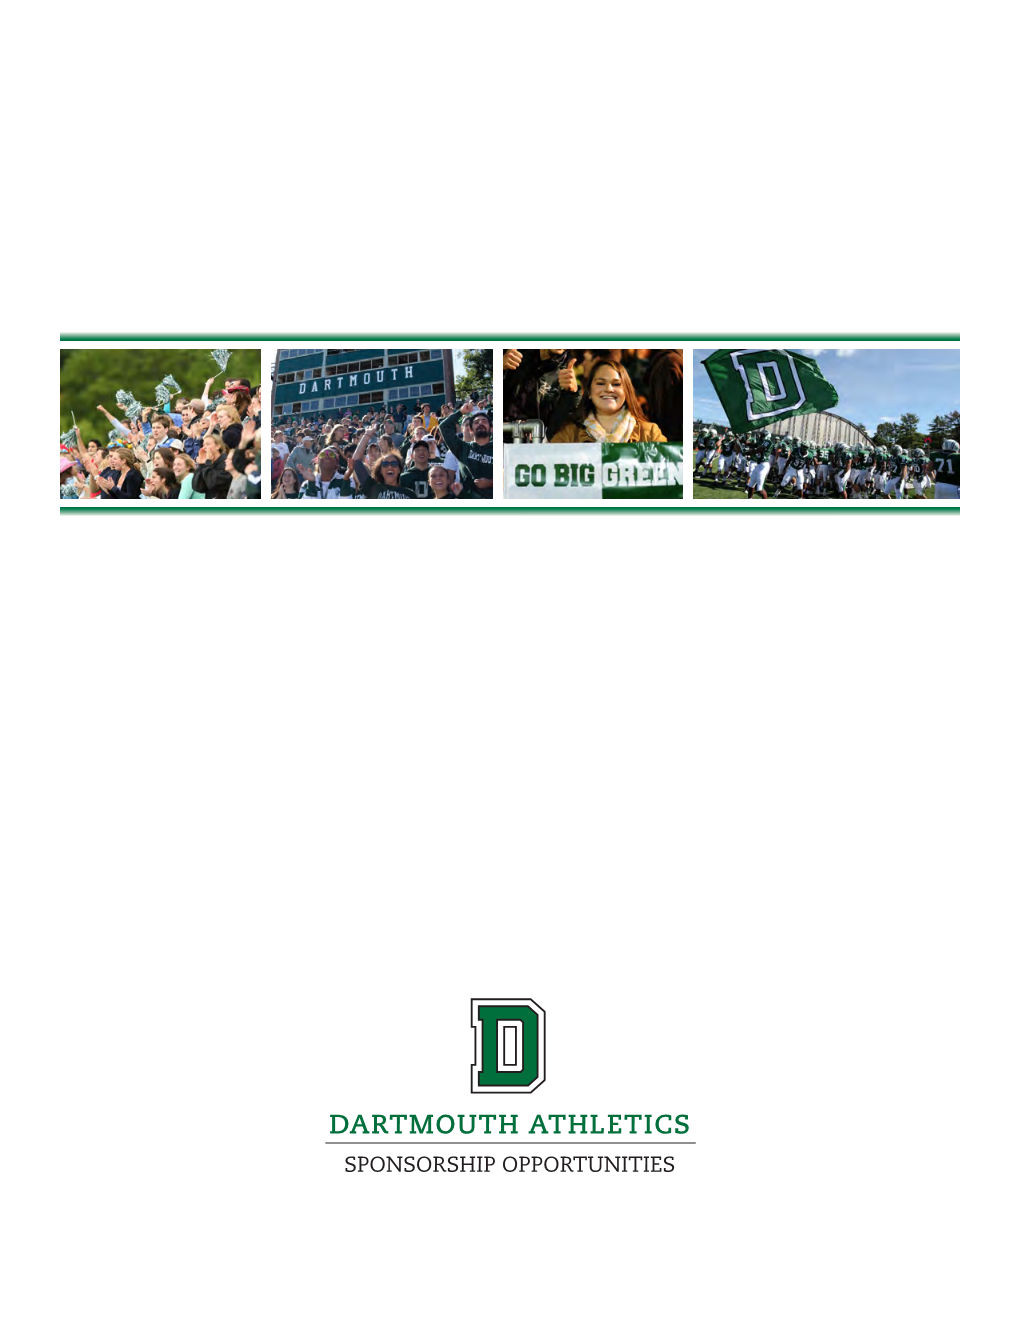 DARTMOUTH ATHLETICS SPONSORSHIP OPPORTUNITIES $136,500 Dartmouth Grads $74,600 Hanover, NH Hanover, FANS Alumni Magazine from * Data